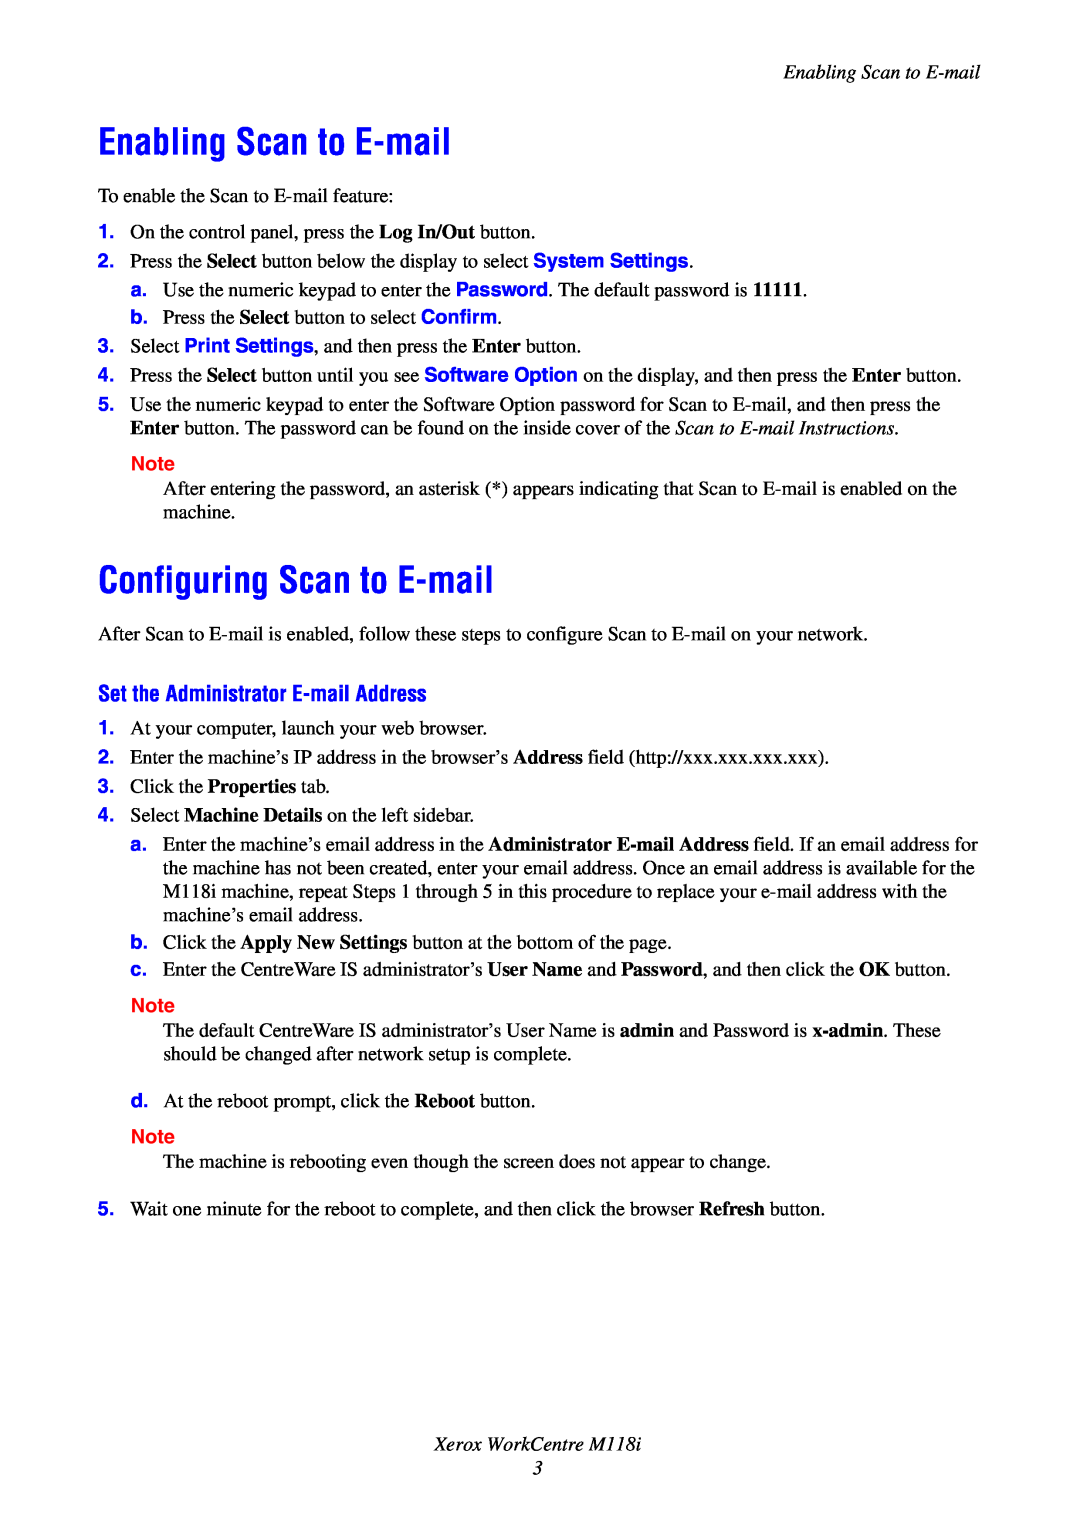 Xerox M118i manual Enabling Scan to E-mail, Configuring Scan to E-mail, Set the Administrator E-mailAddress 